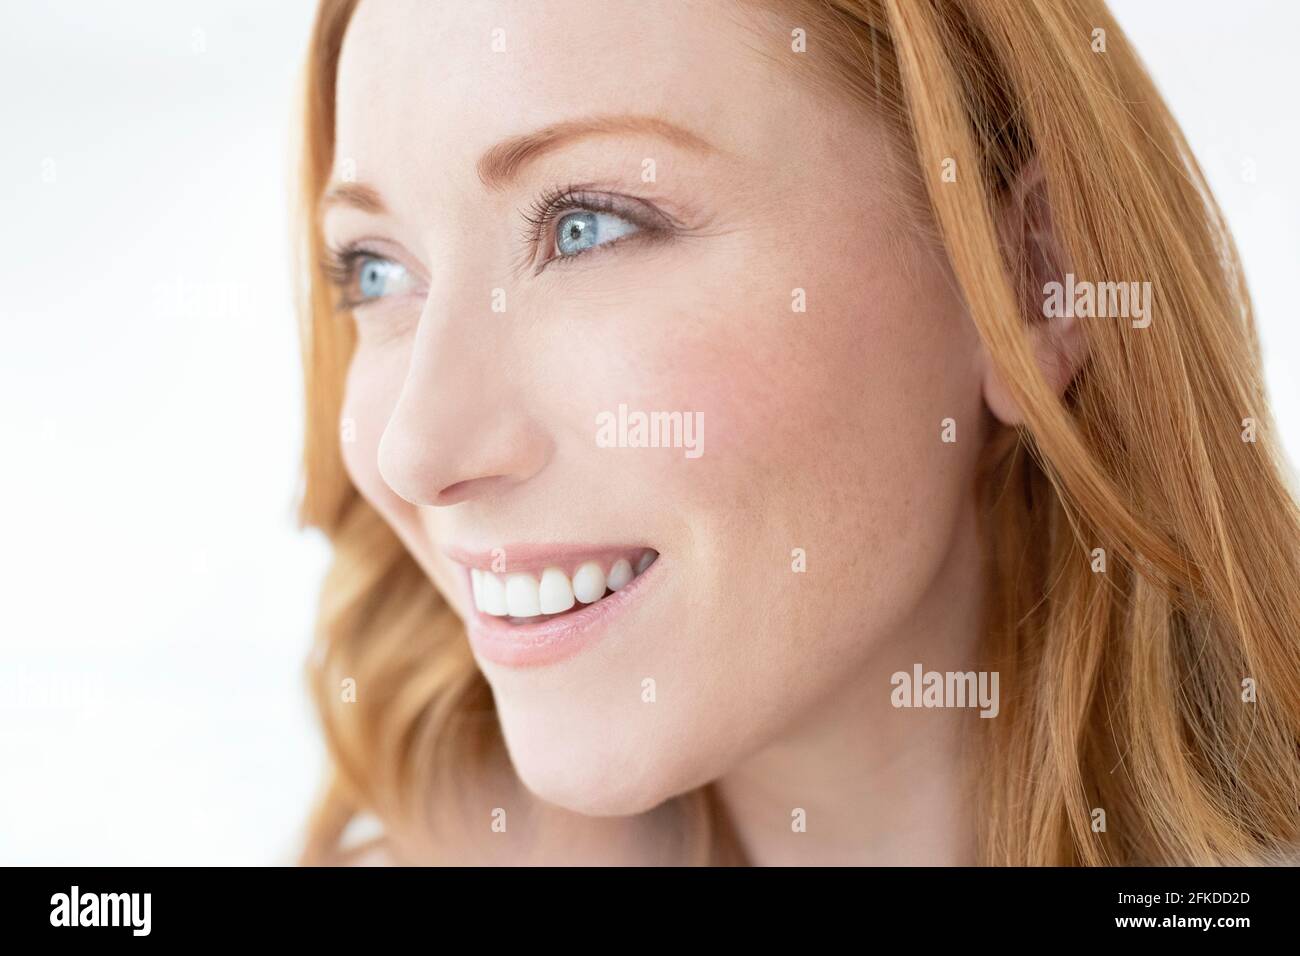 Smiling woman Stock Photo